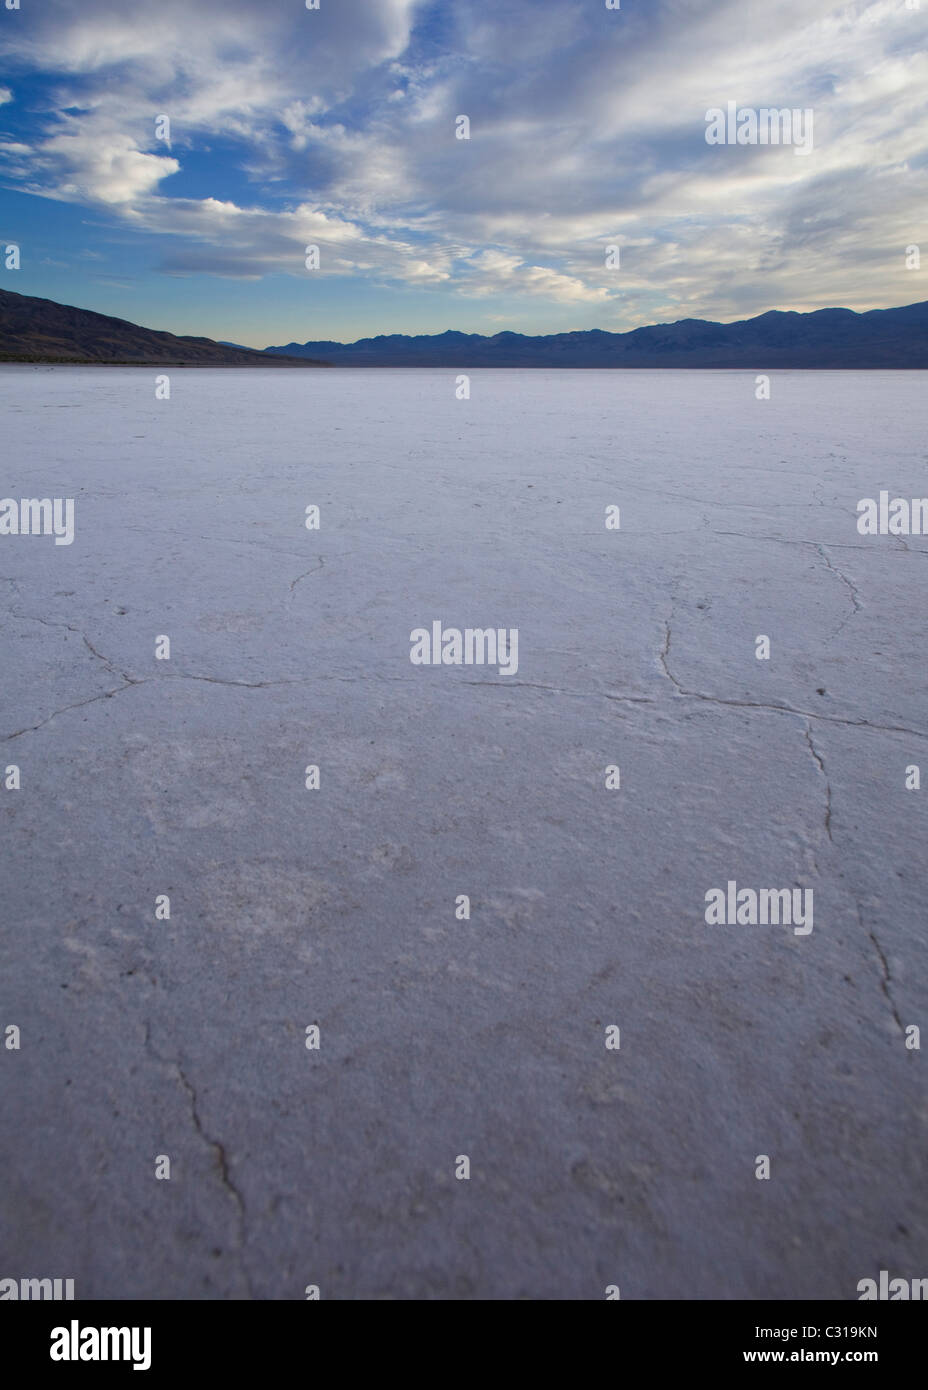 Badwater dry salt lake bed (salt flats) - Death Valley, California USA Stock Photo